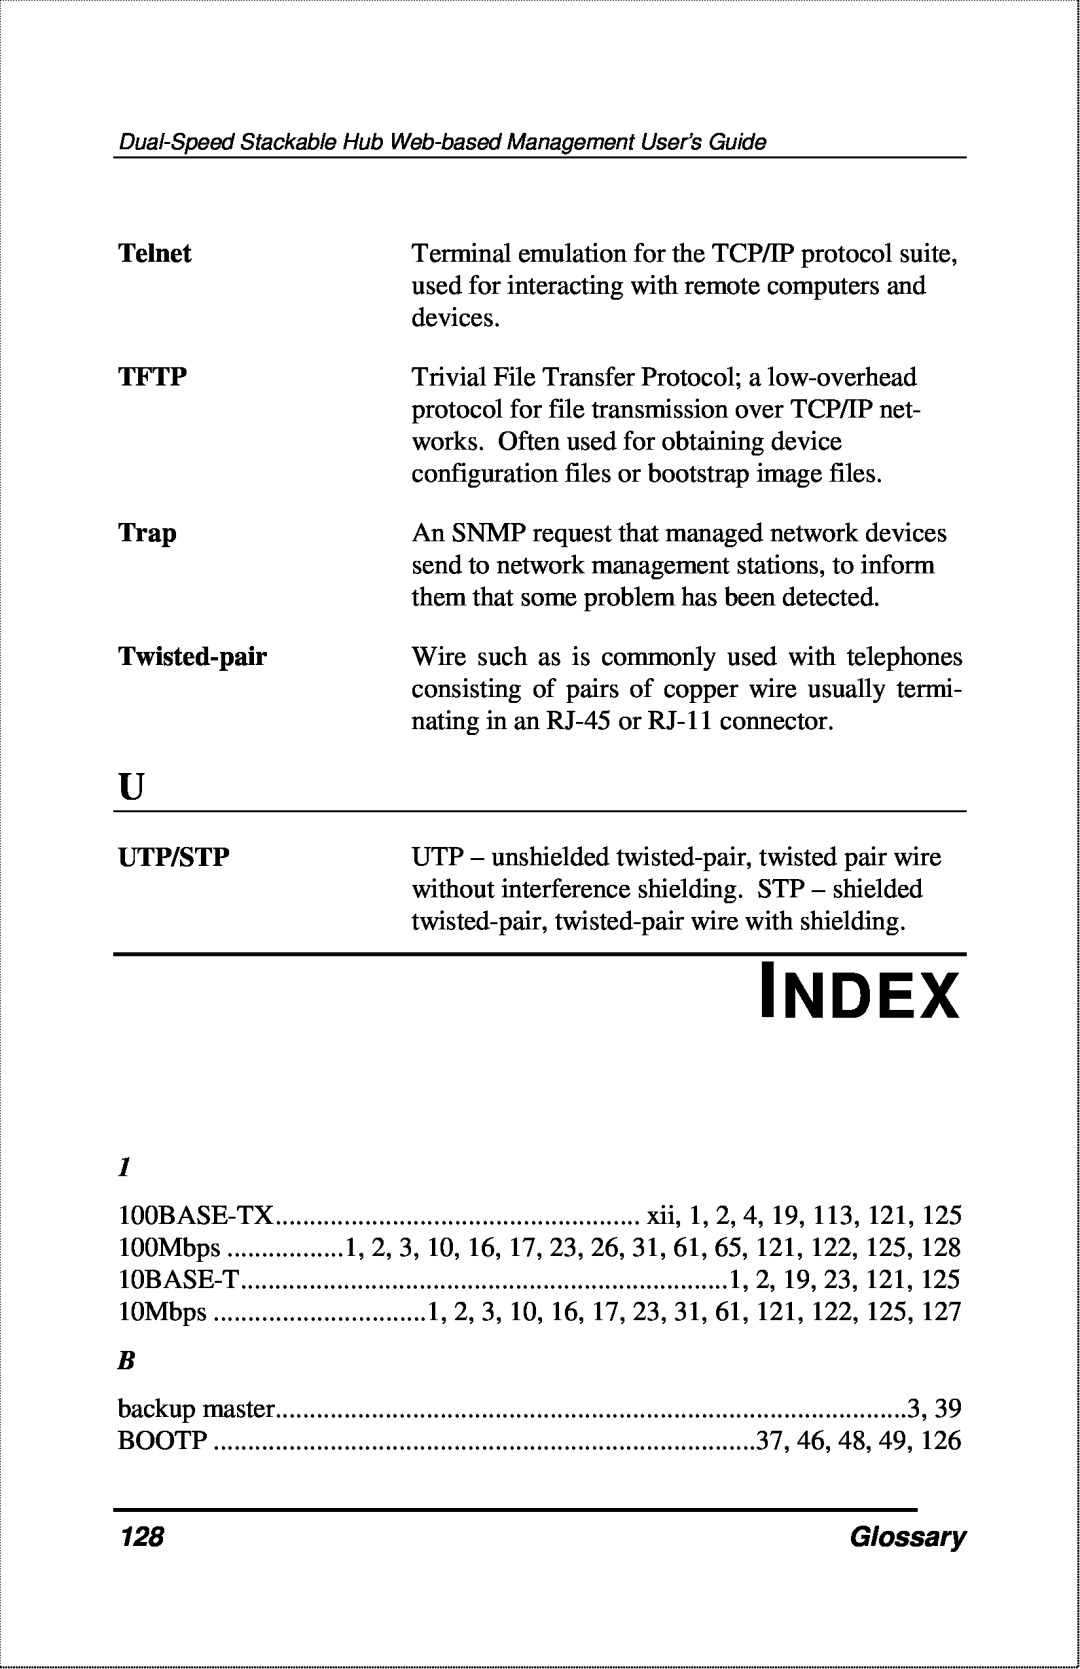 D-Link DFE-2600 manual Index, Telnet, Tftp, Trap, Twisted-pair, Utp/Stp, Glossary 